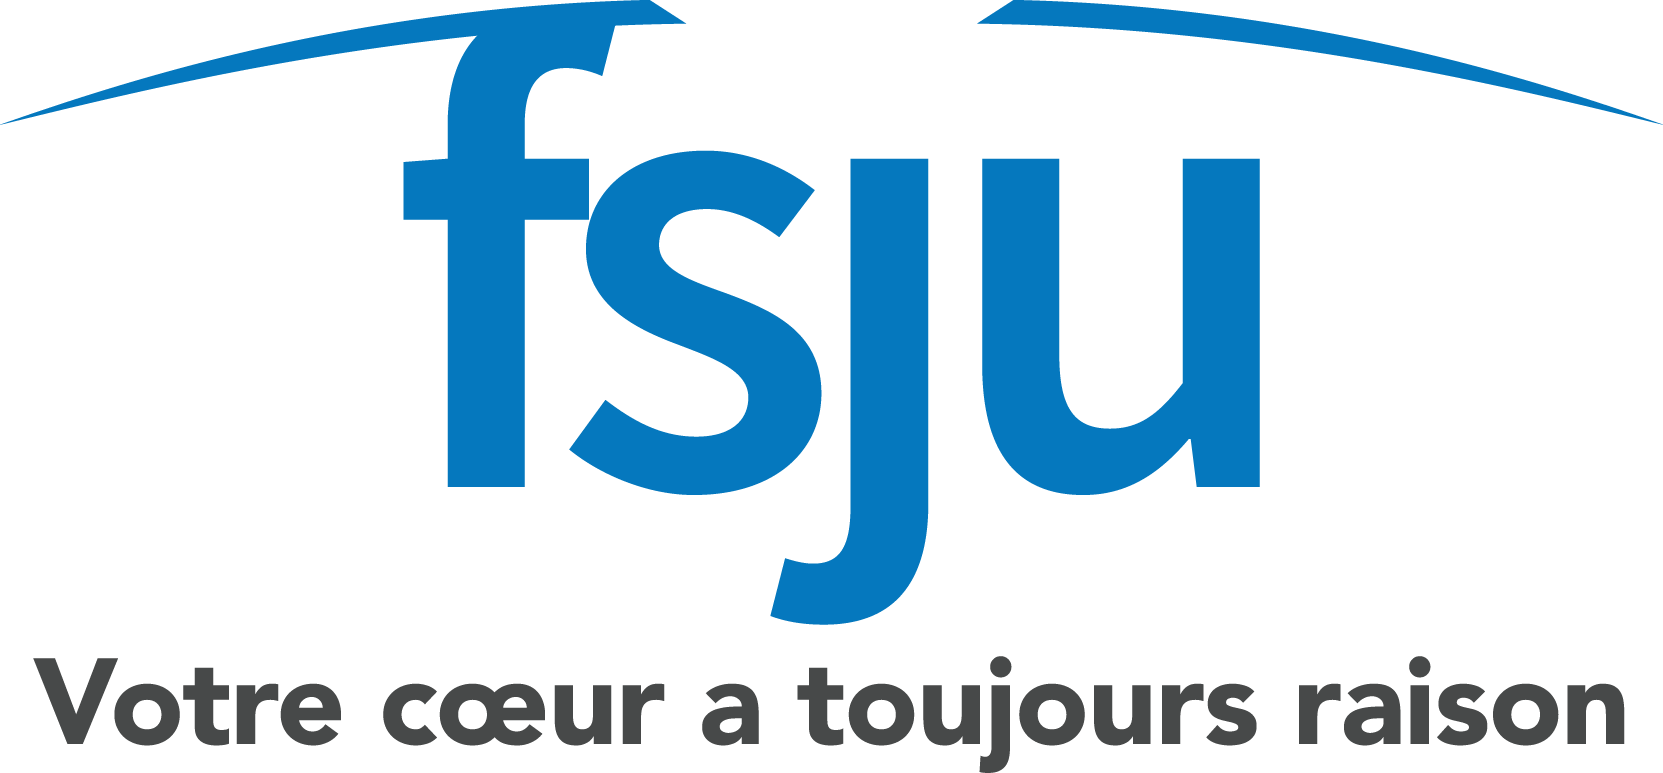 Logo Fonds Social Juif Unifié (FSJU)